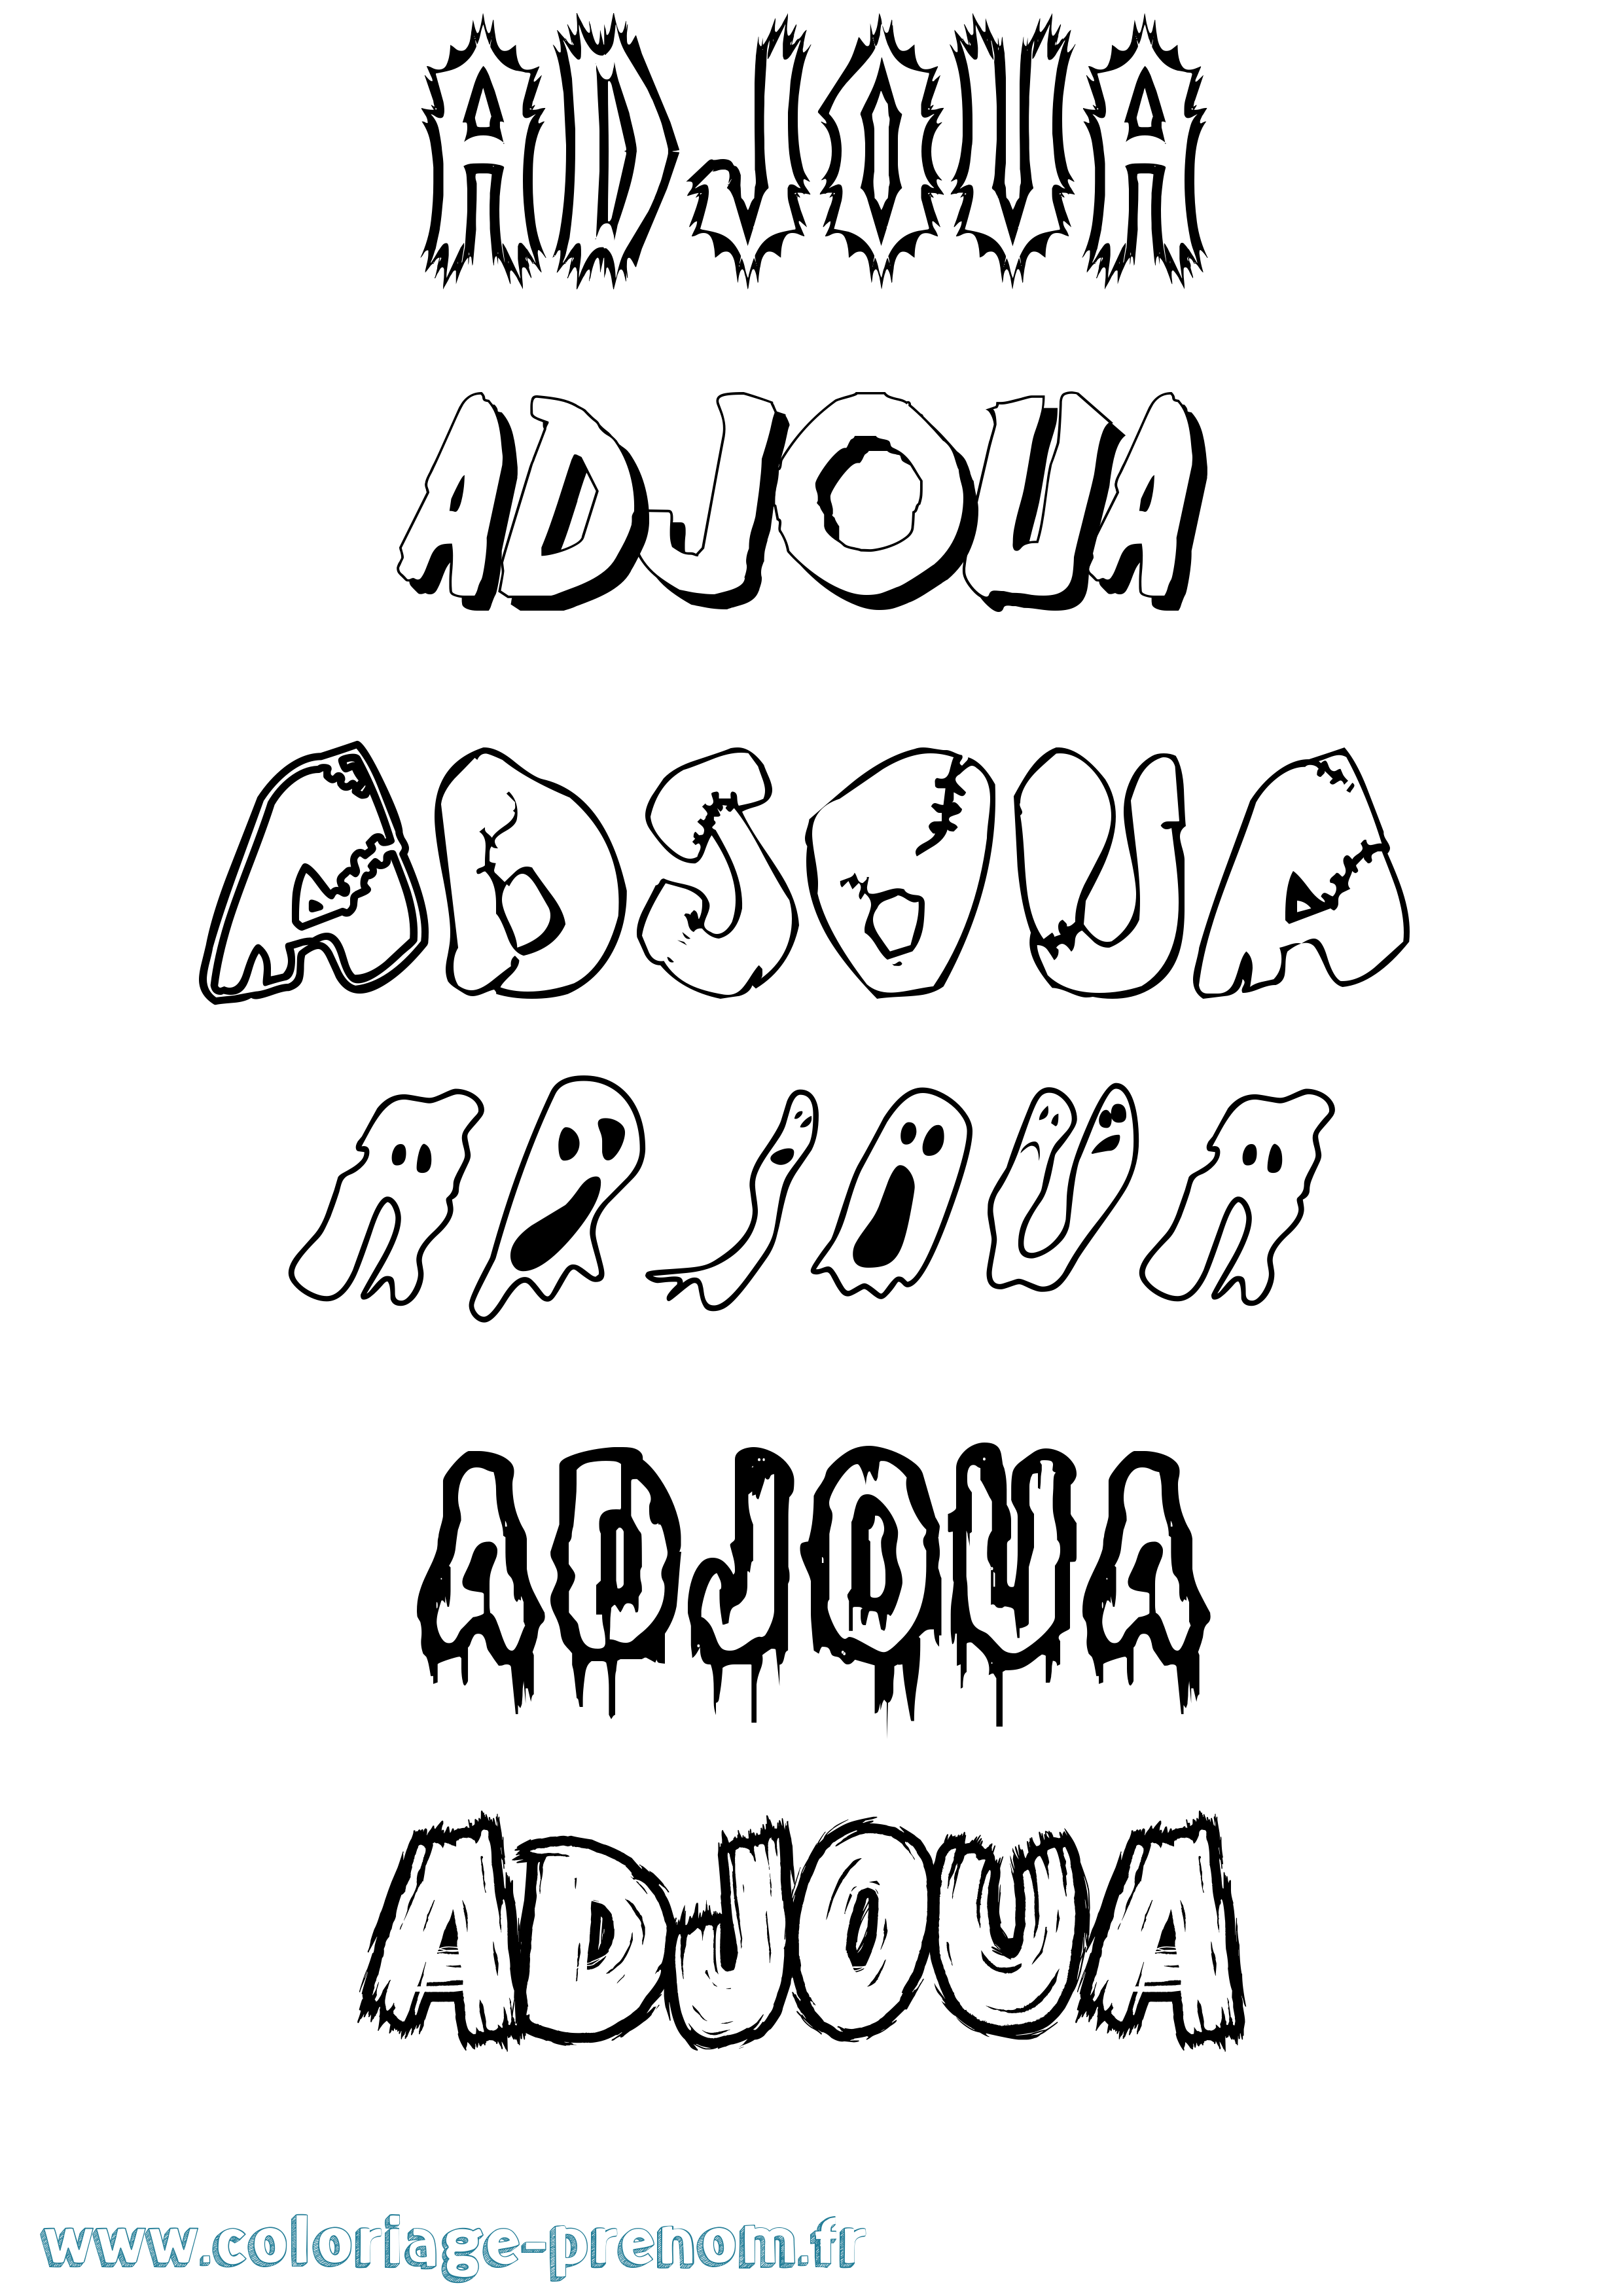 Coloriage prénom Adjoua Frisson